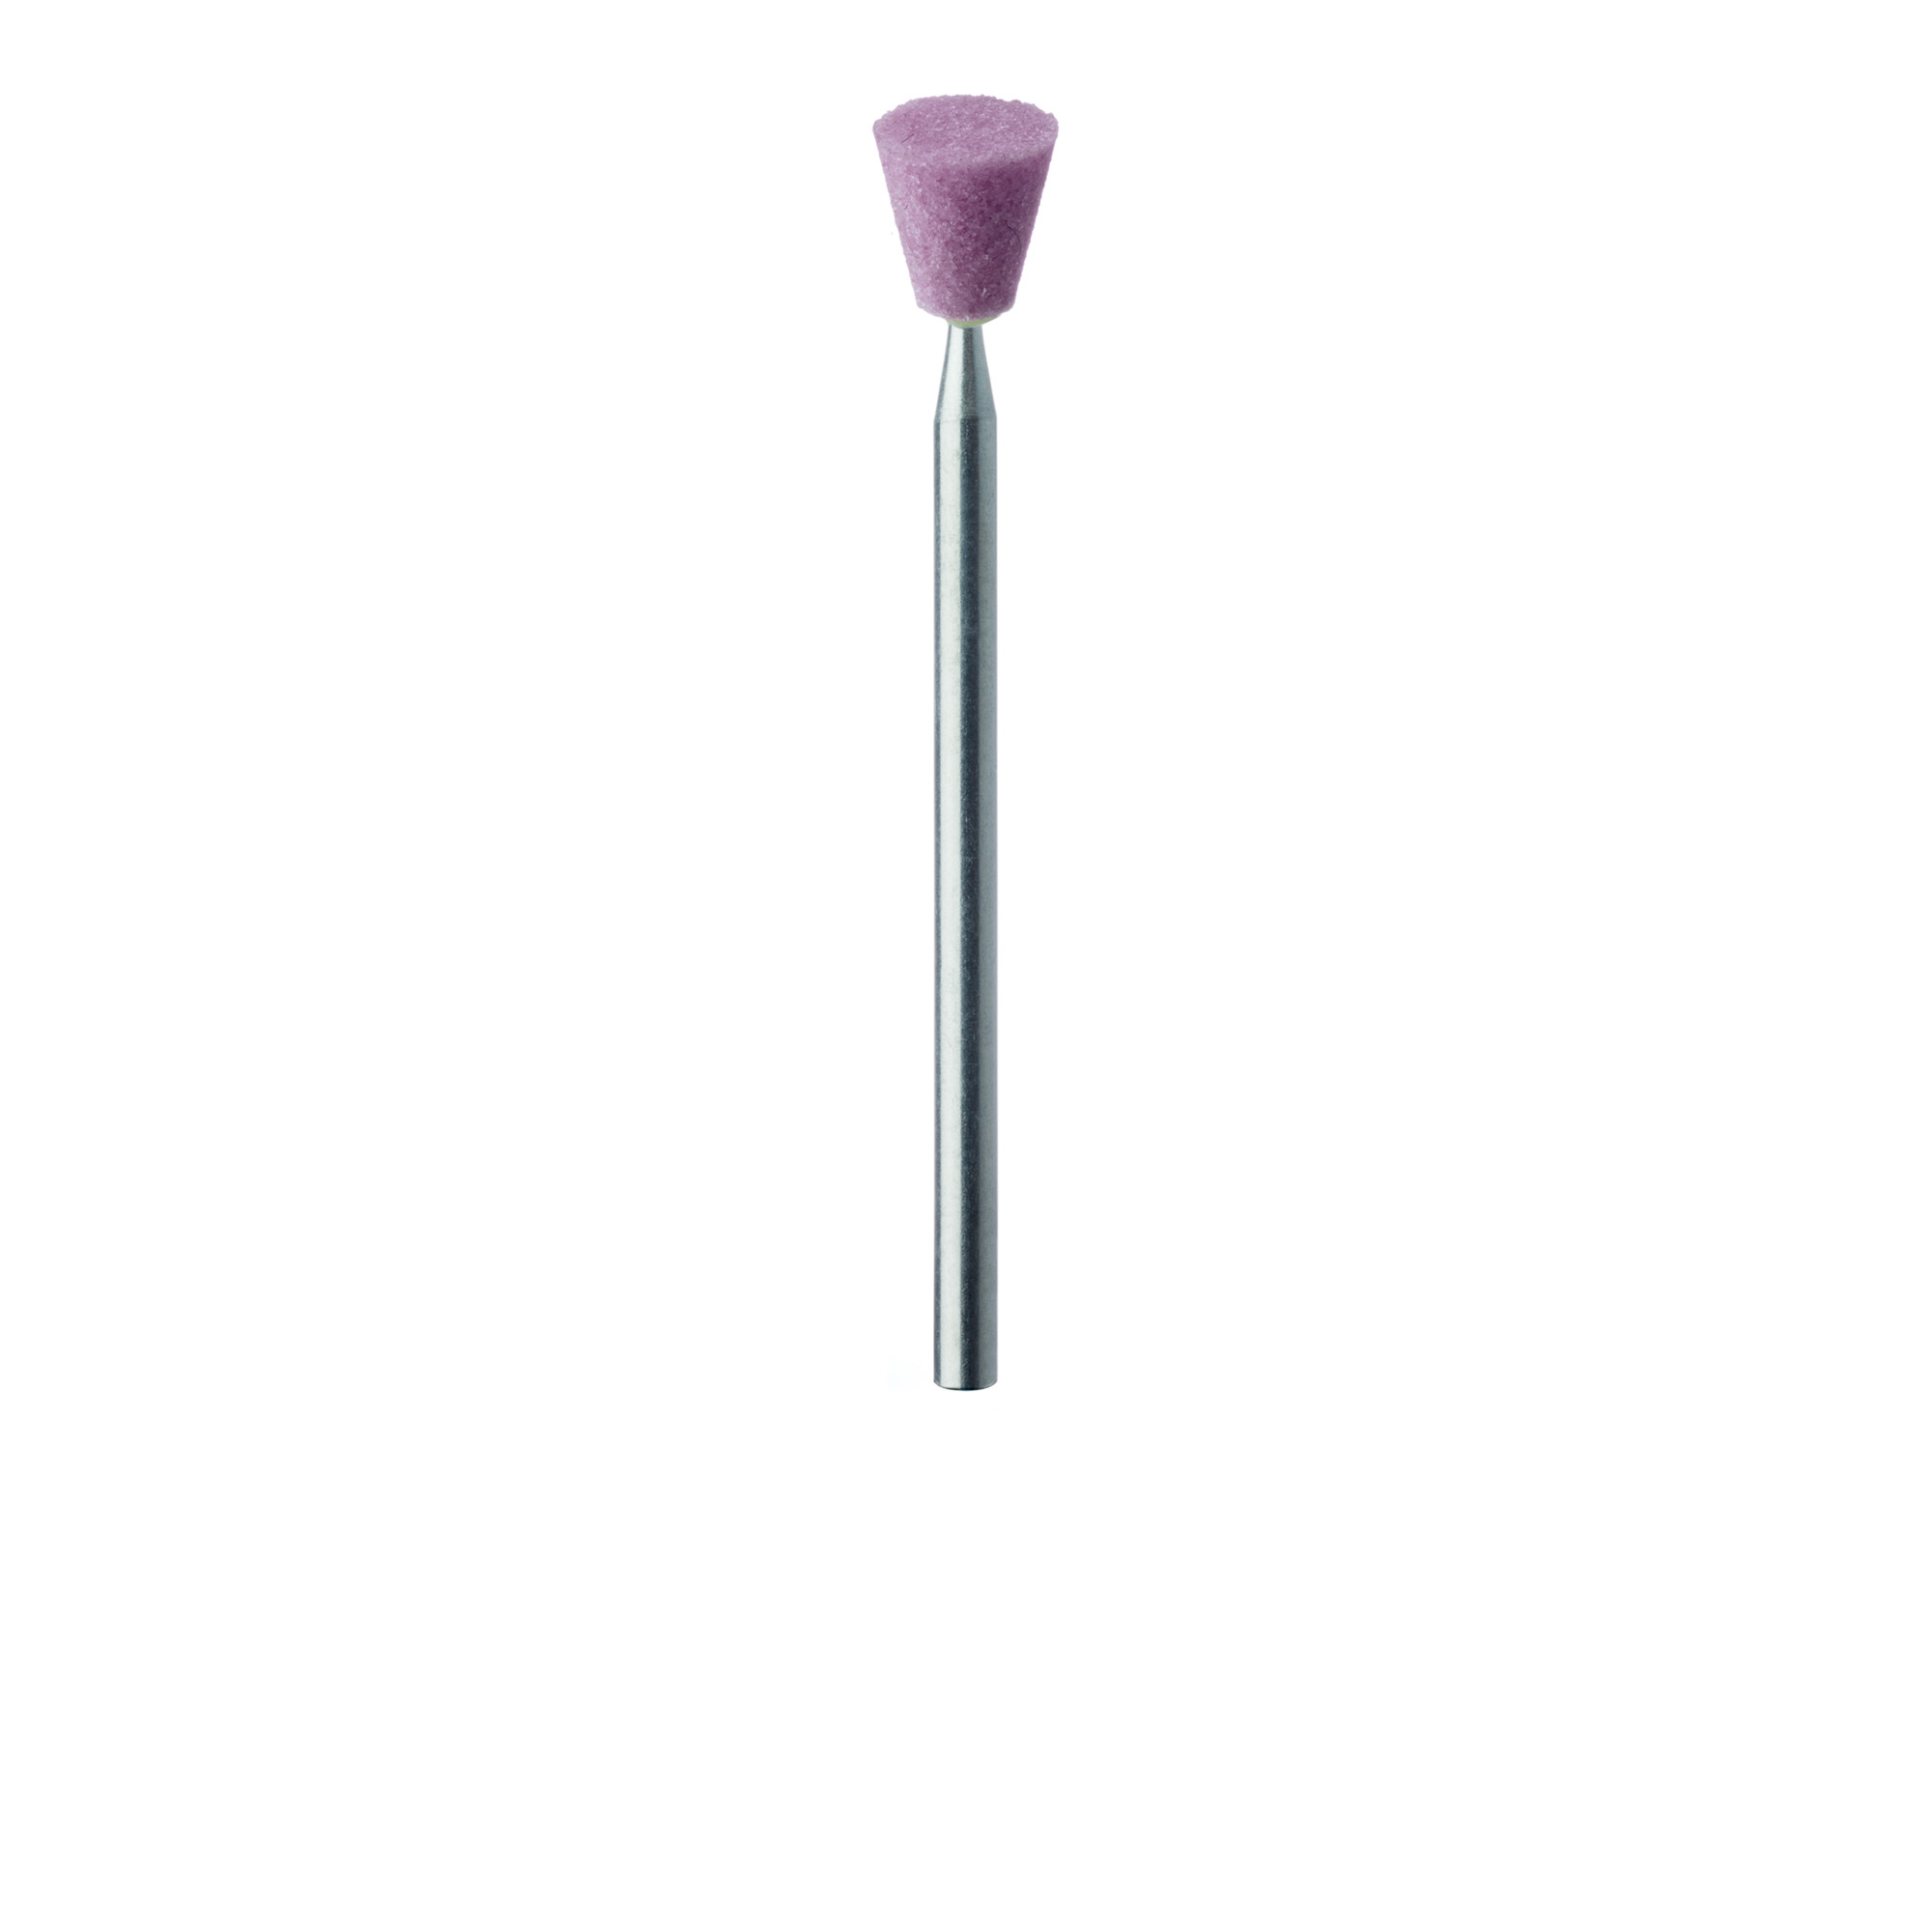 736-065-HP-P Abrasive, Pink, Inverted Cone, 6.5mm Ø, Coarse, HP